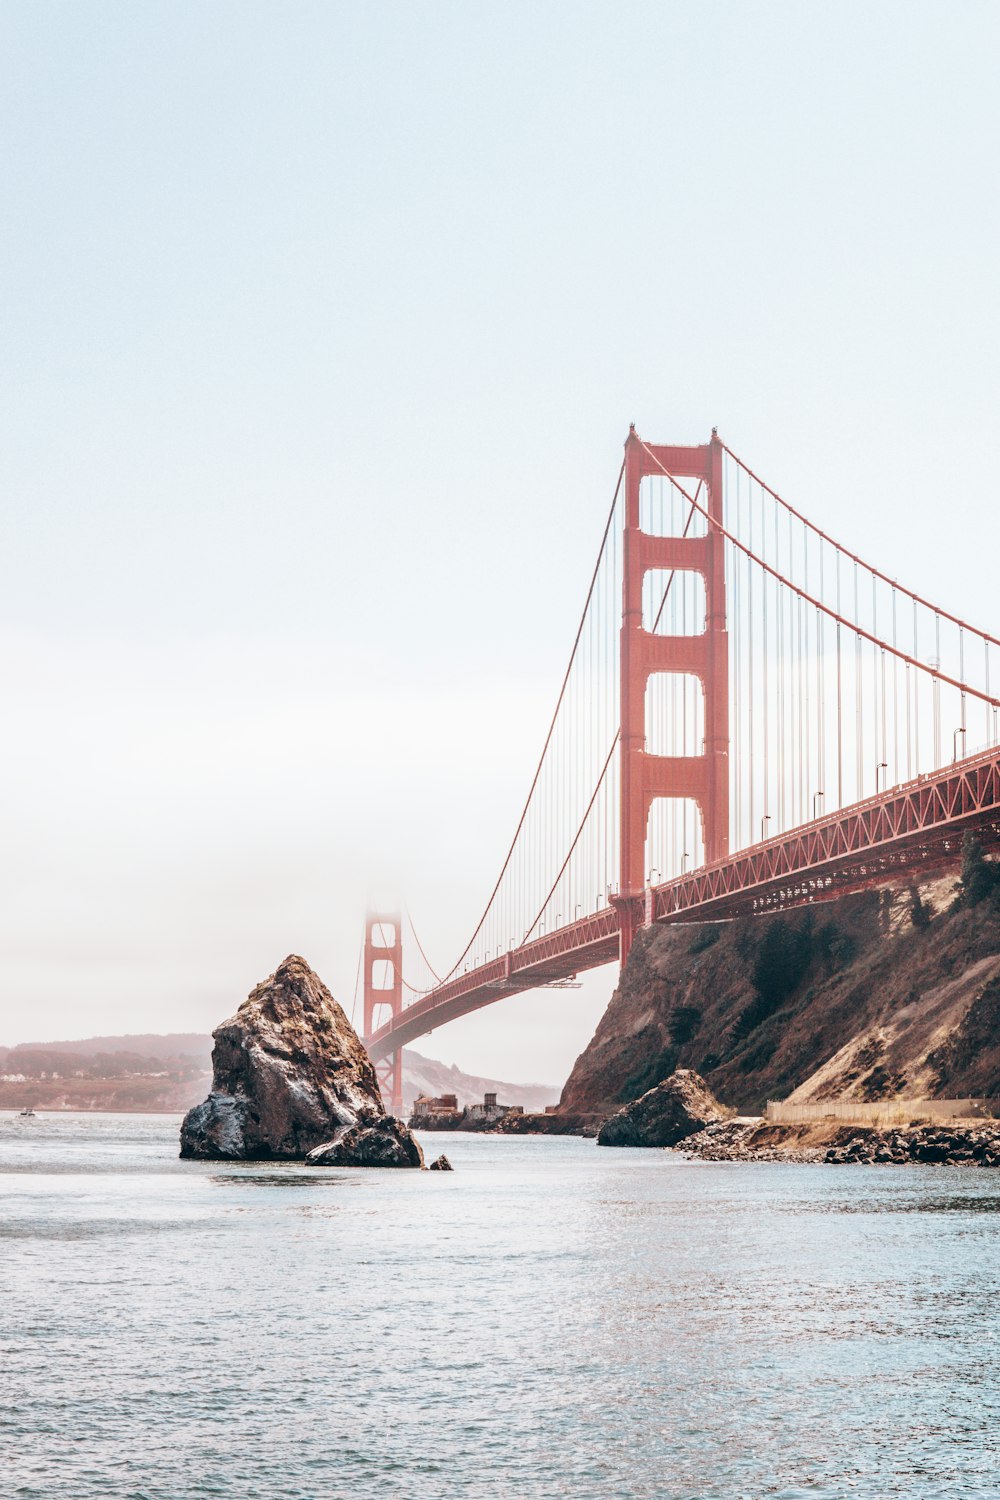 Golden Gate Bridge in San Francisco during daytime